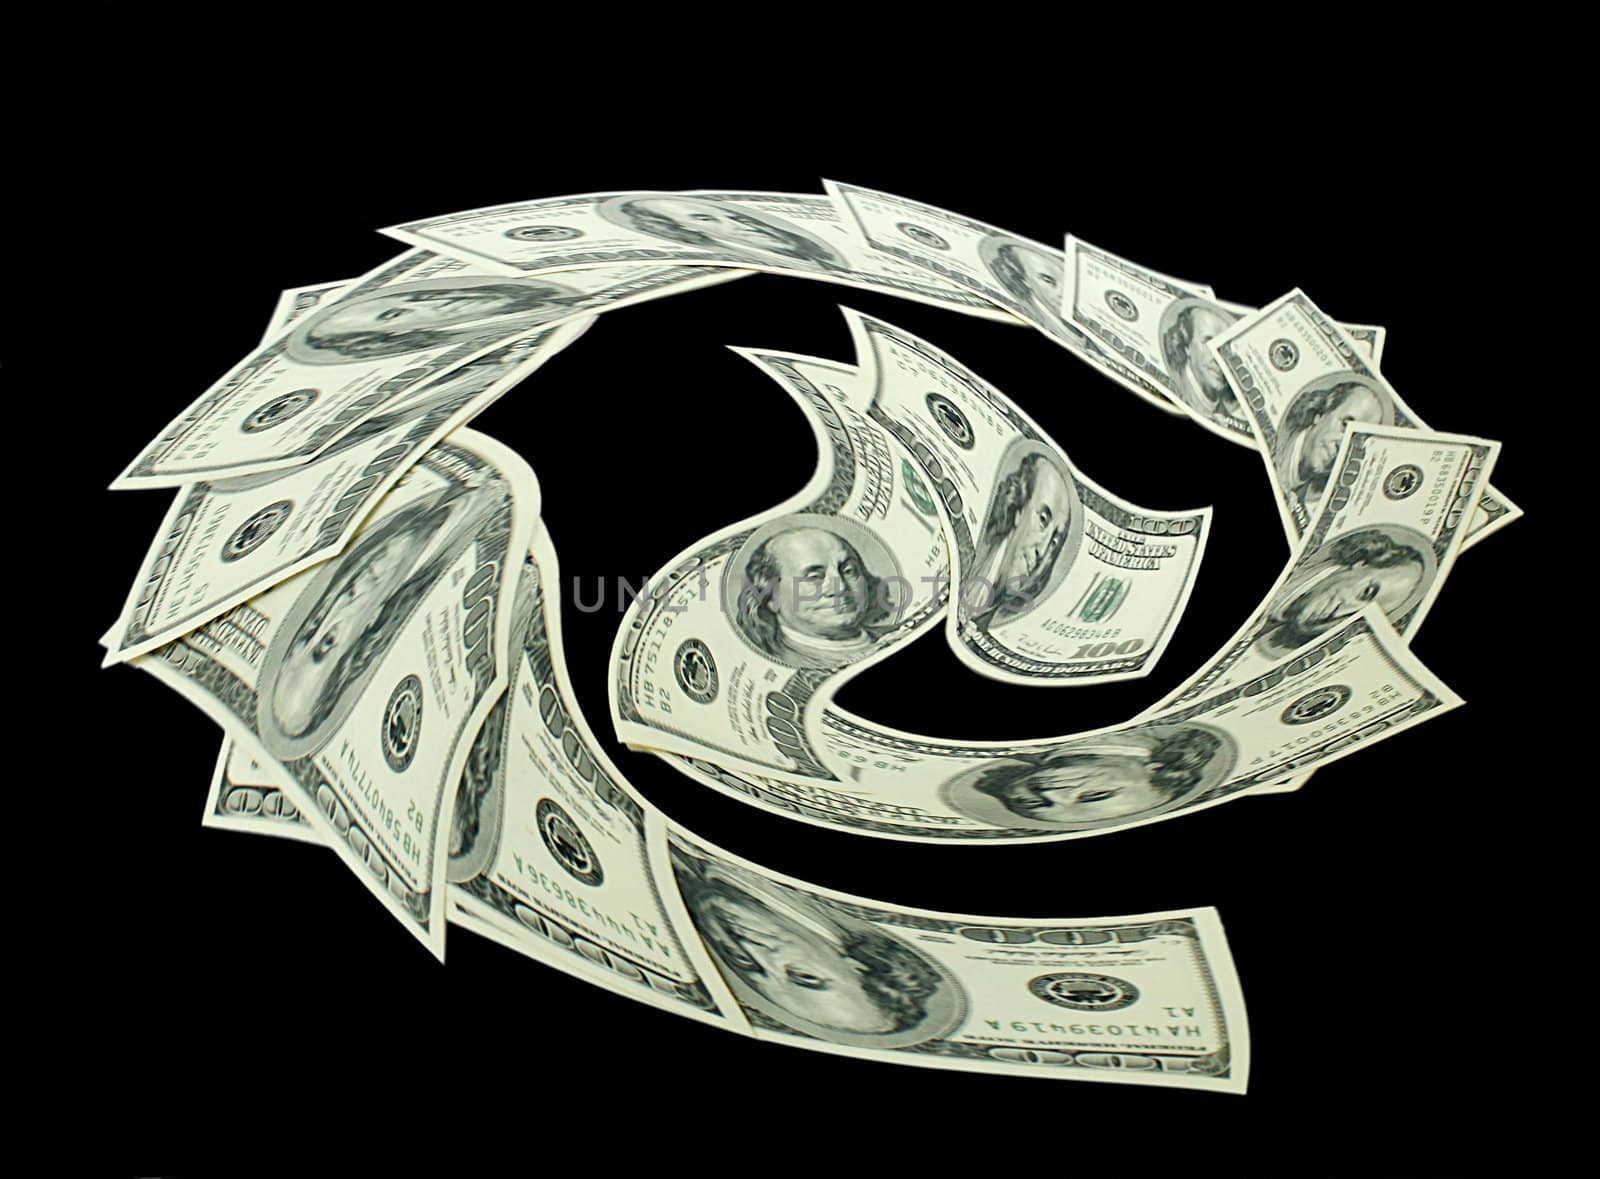 twirl of money (100 dollars) over black background